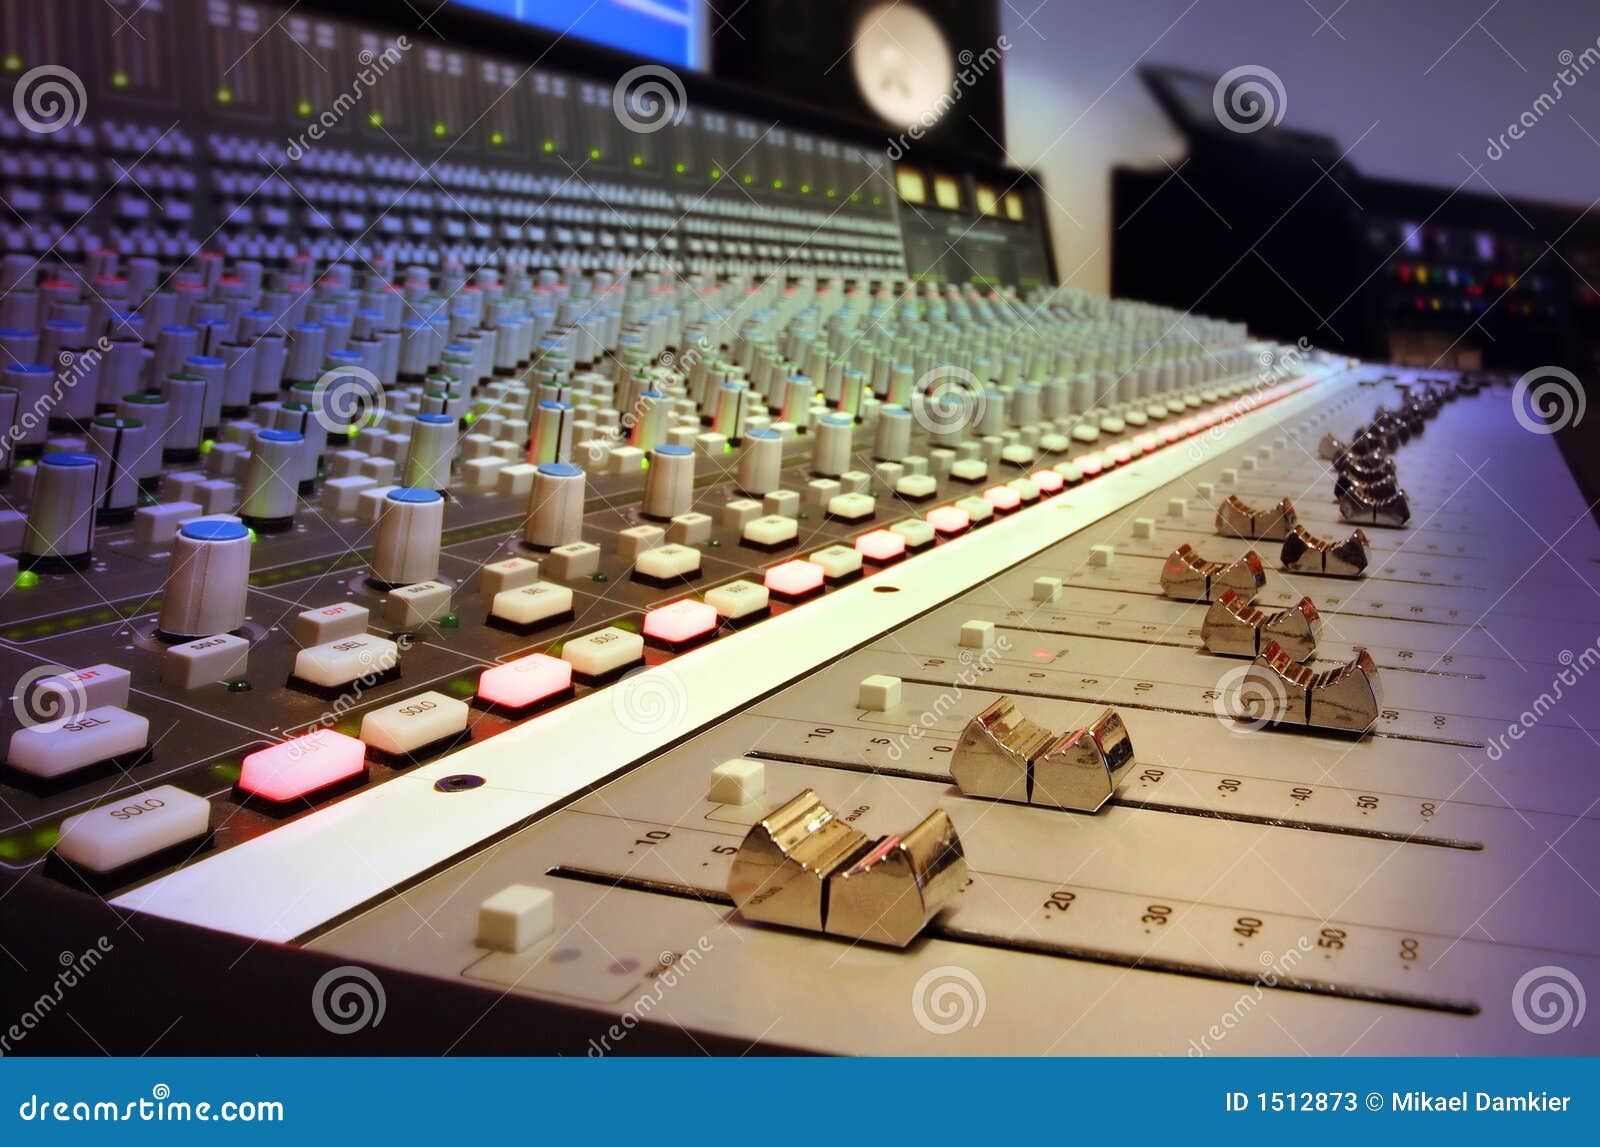 recording studio mixing console